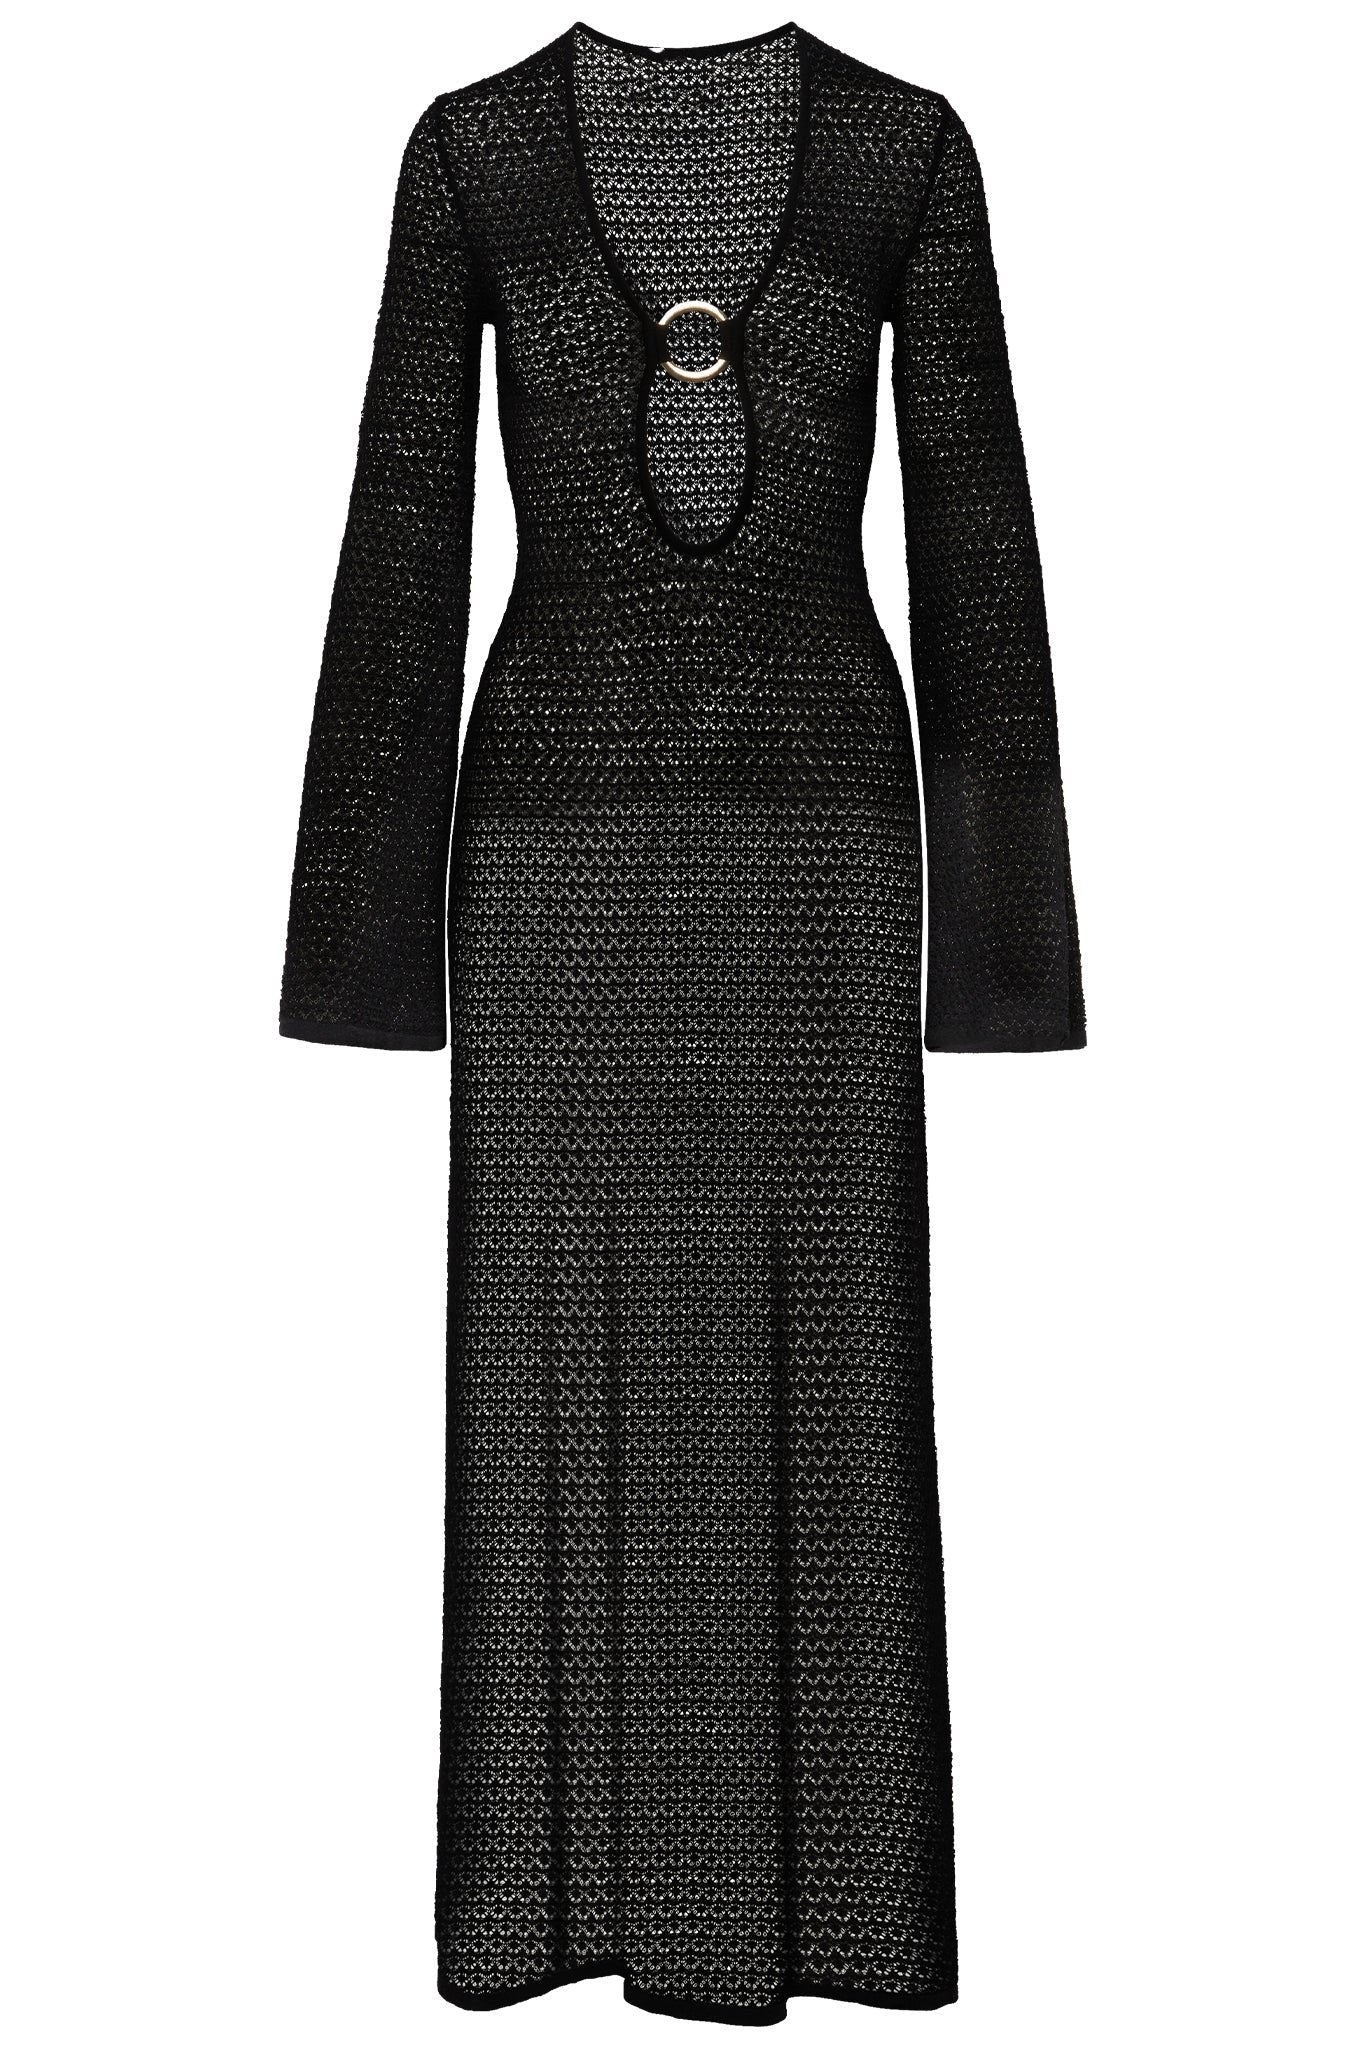 dresses-Chaya V-neck Crochet Knit Maxi Dress-SD00211271977-Black-S - Sunfere